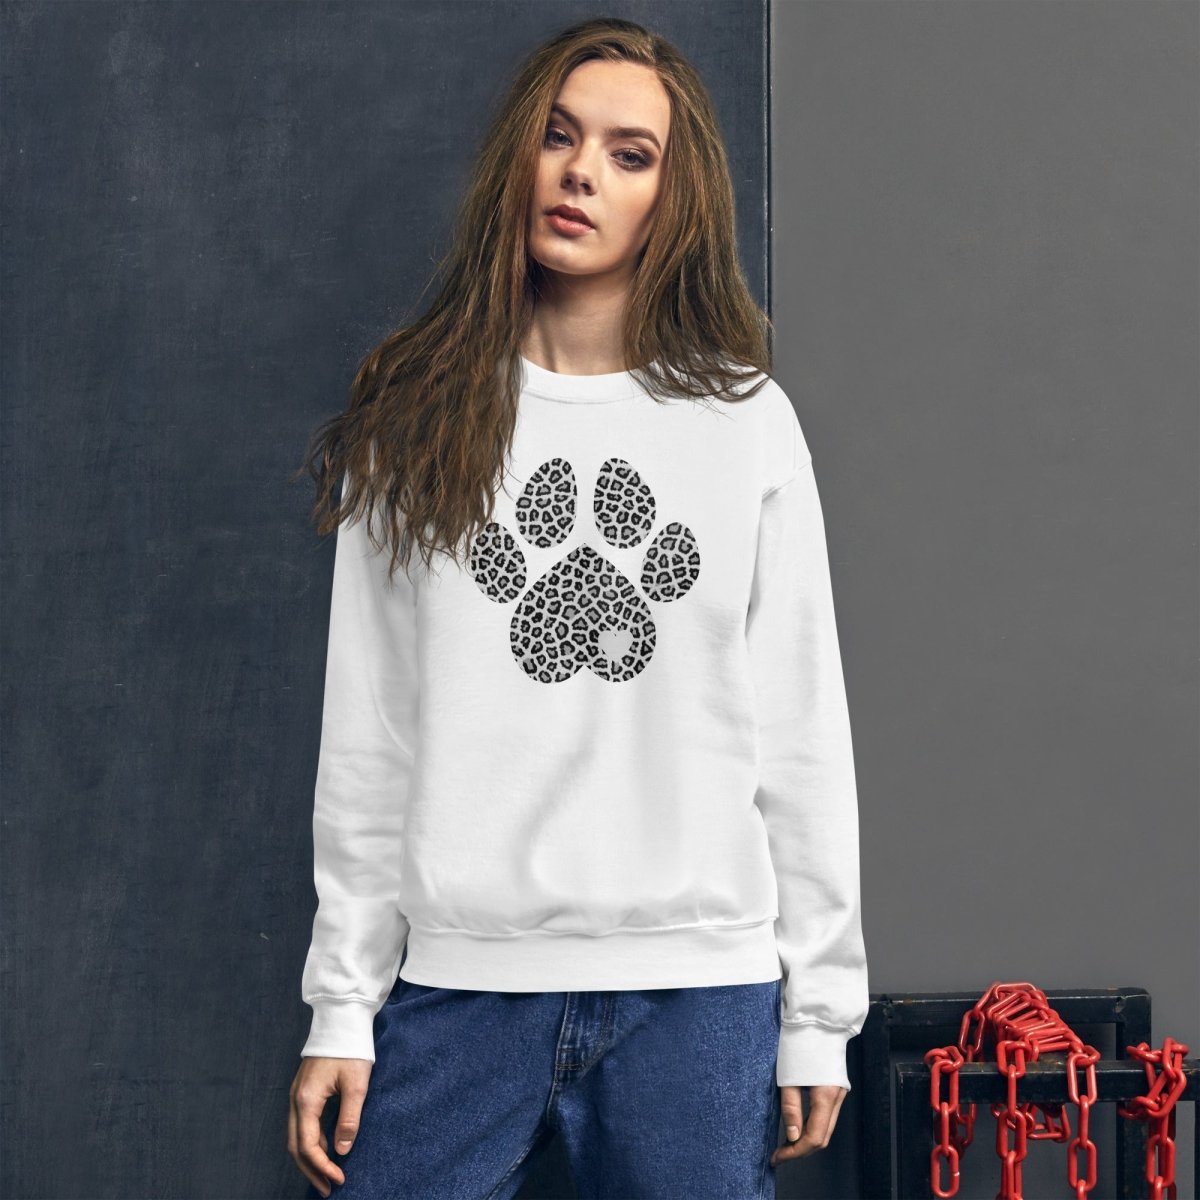 Grey Leopard Print Dog Paw Sweatshirt - DoggyLoveandMore